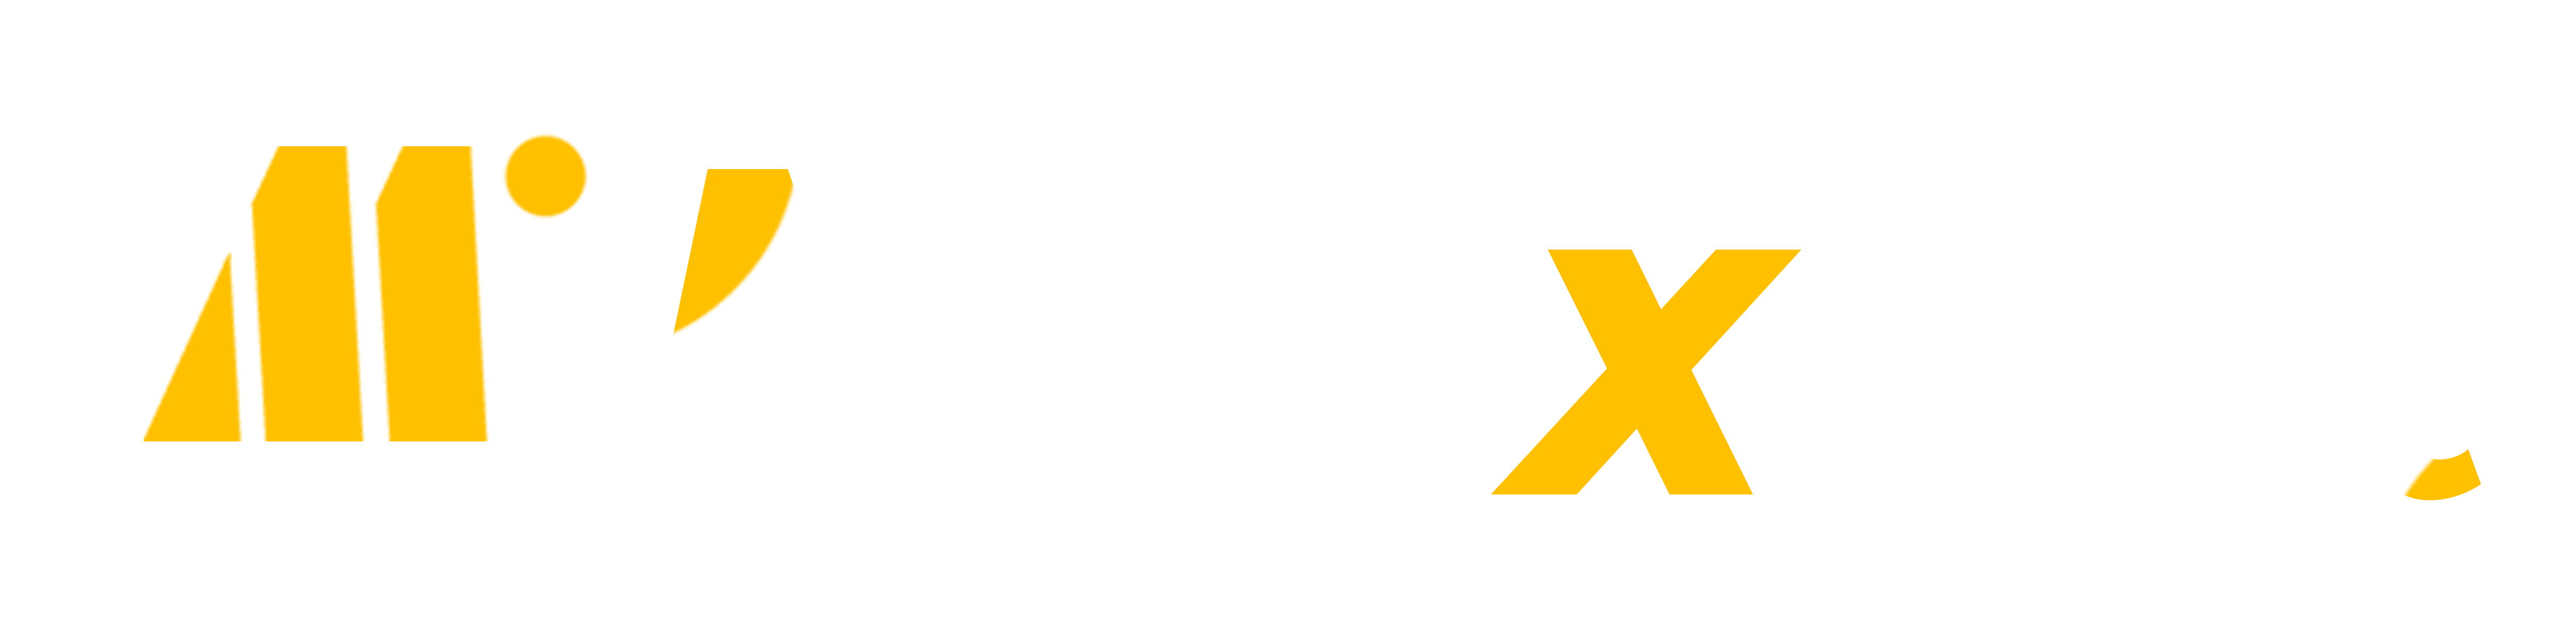 The Macxsoft